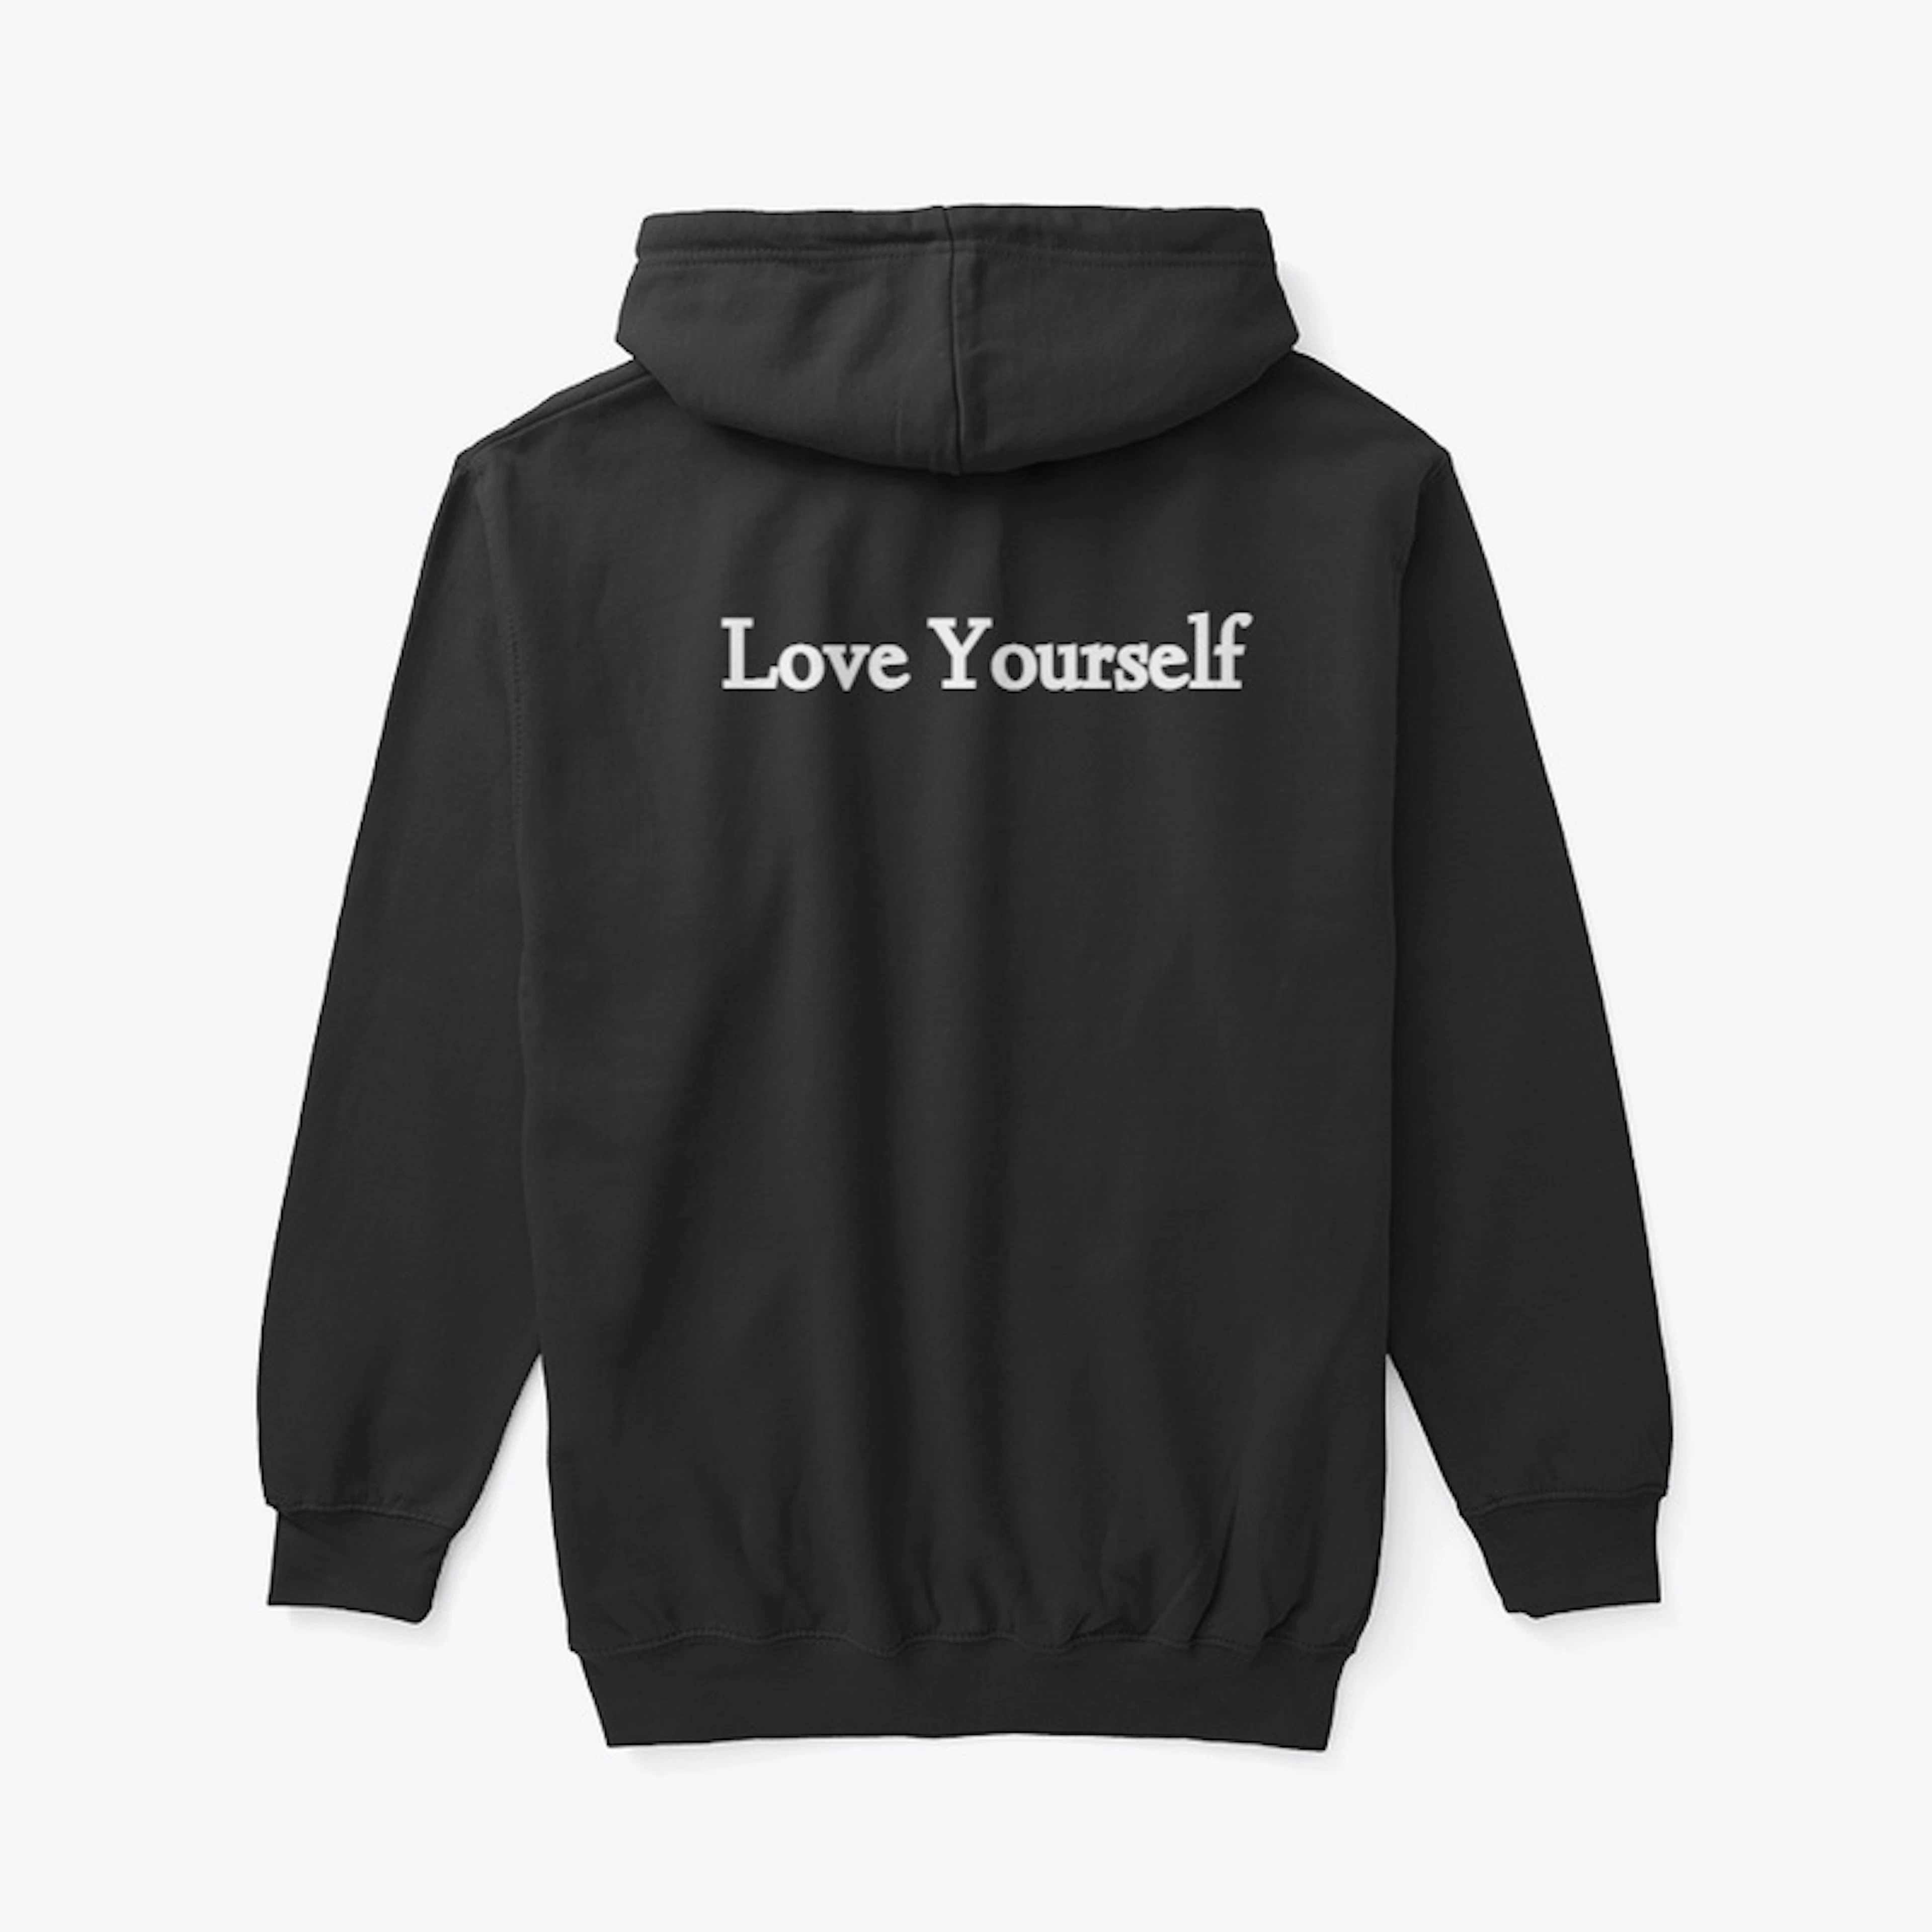 Love yourself. 